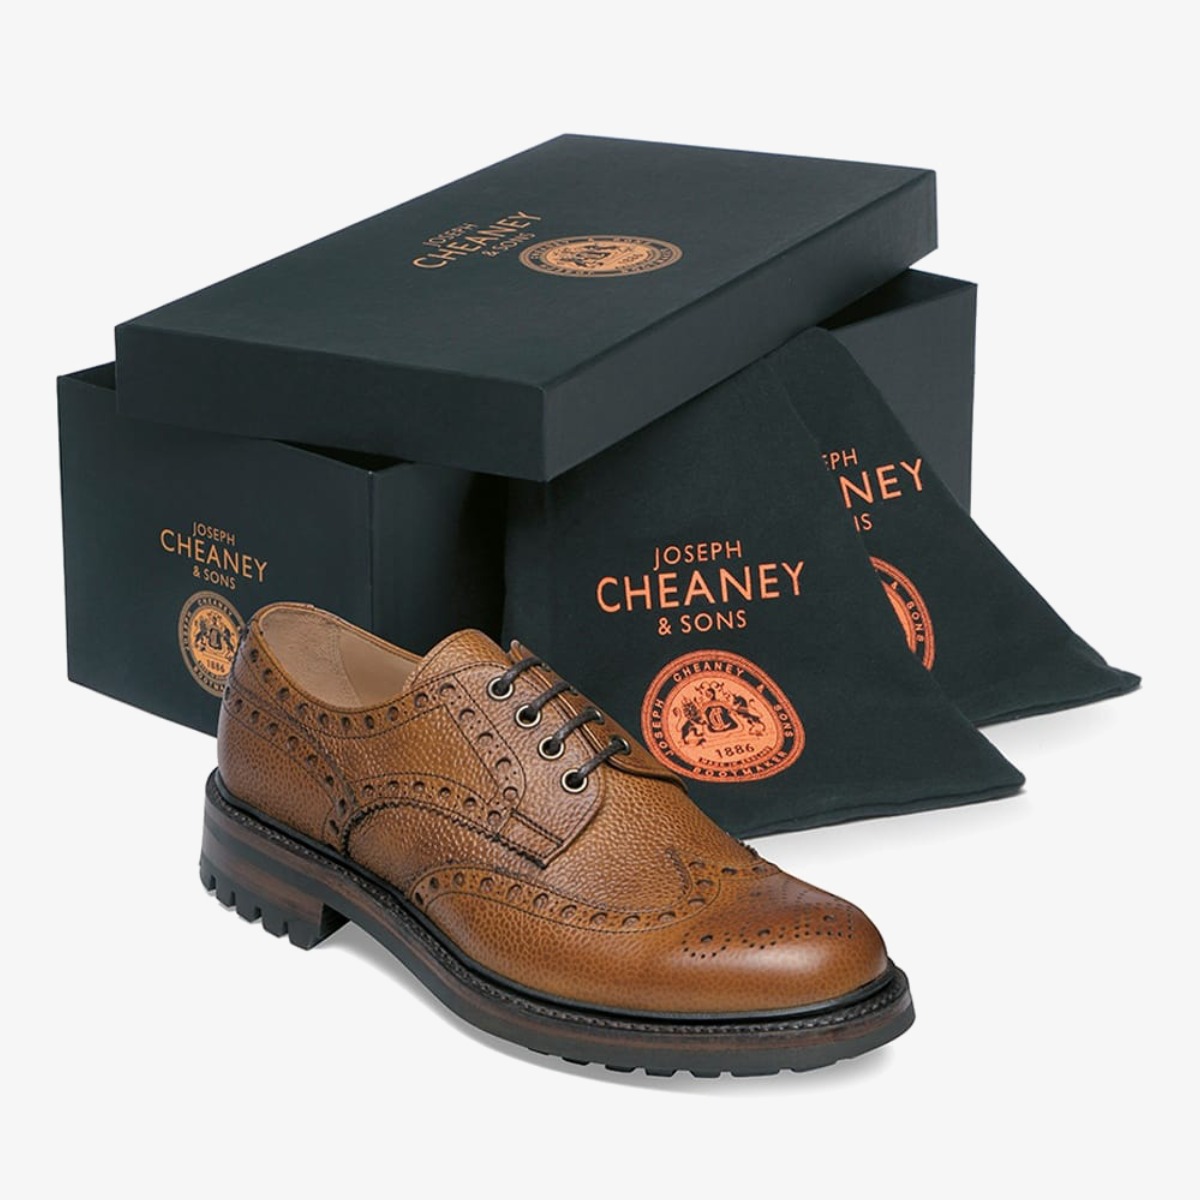 Cheaney Avon almond brogue men's derby shoes